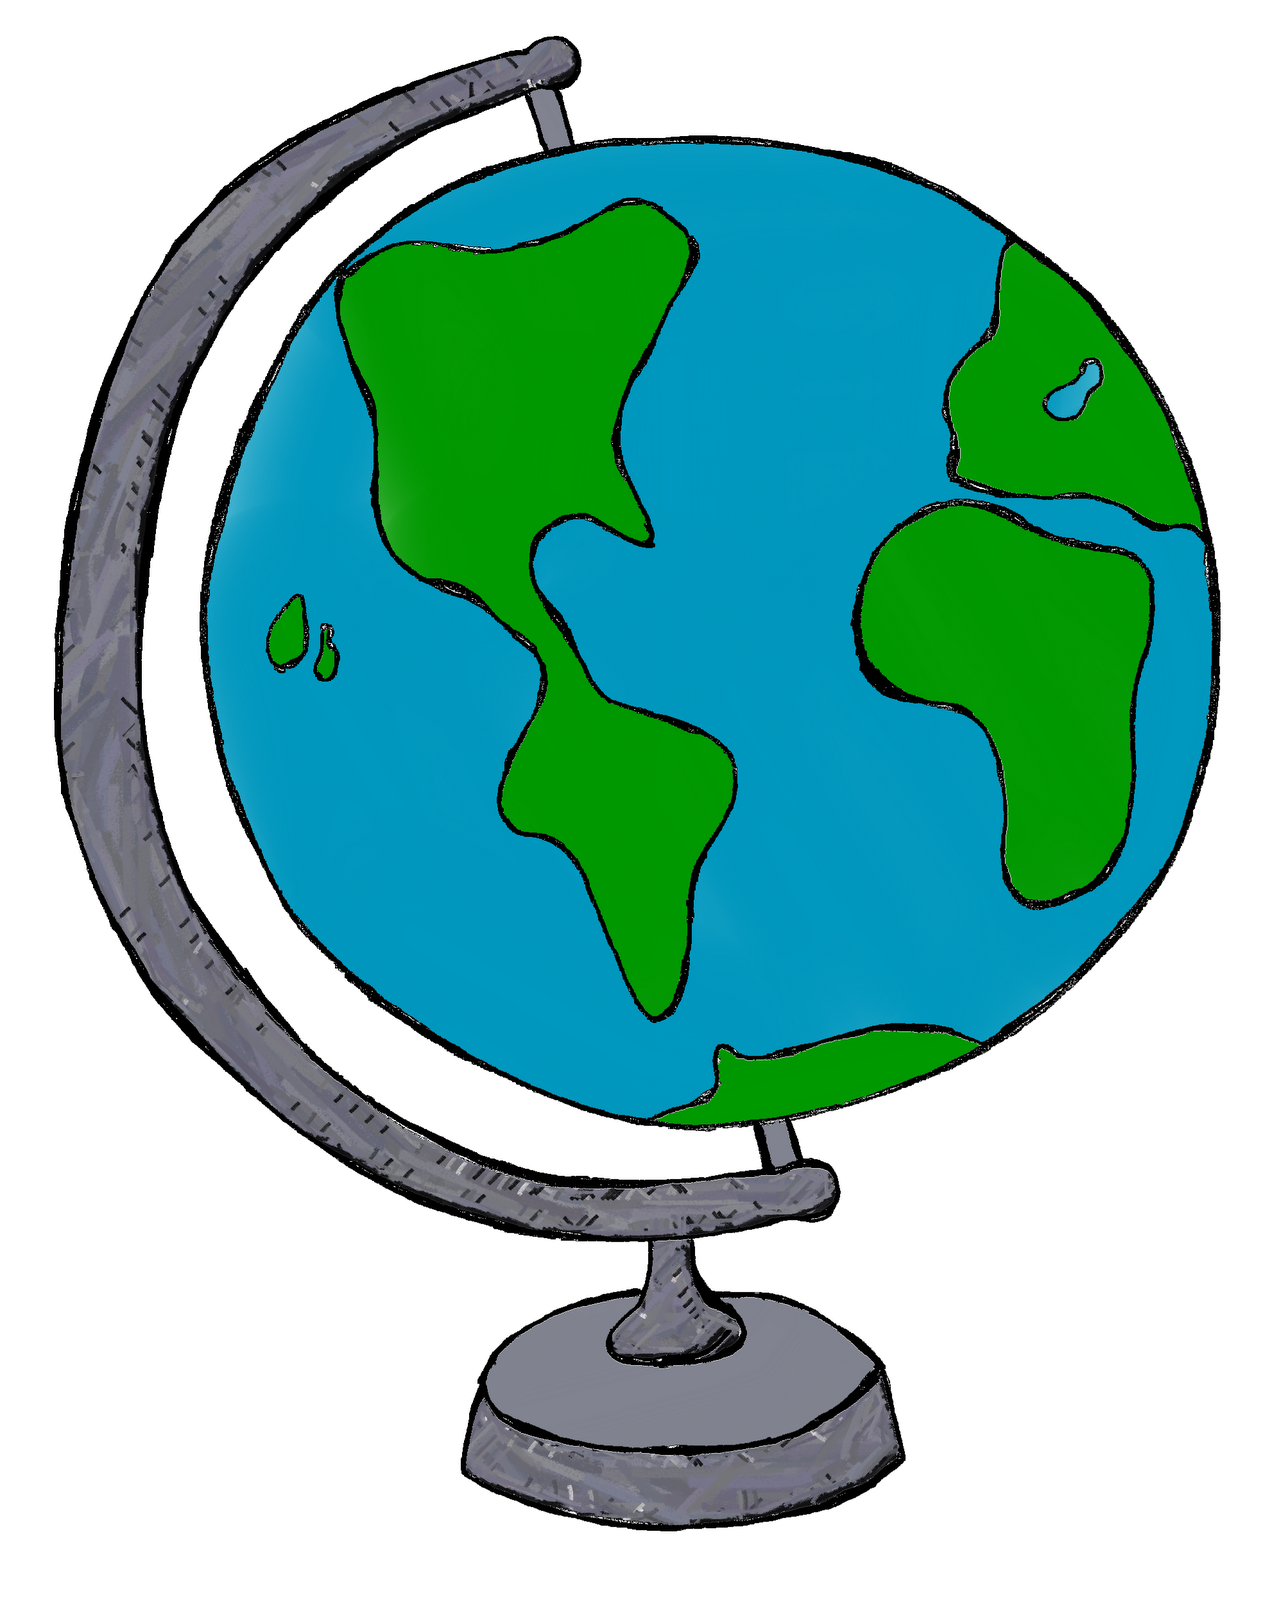 Free clipart globe world